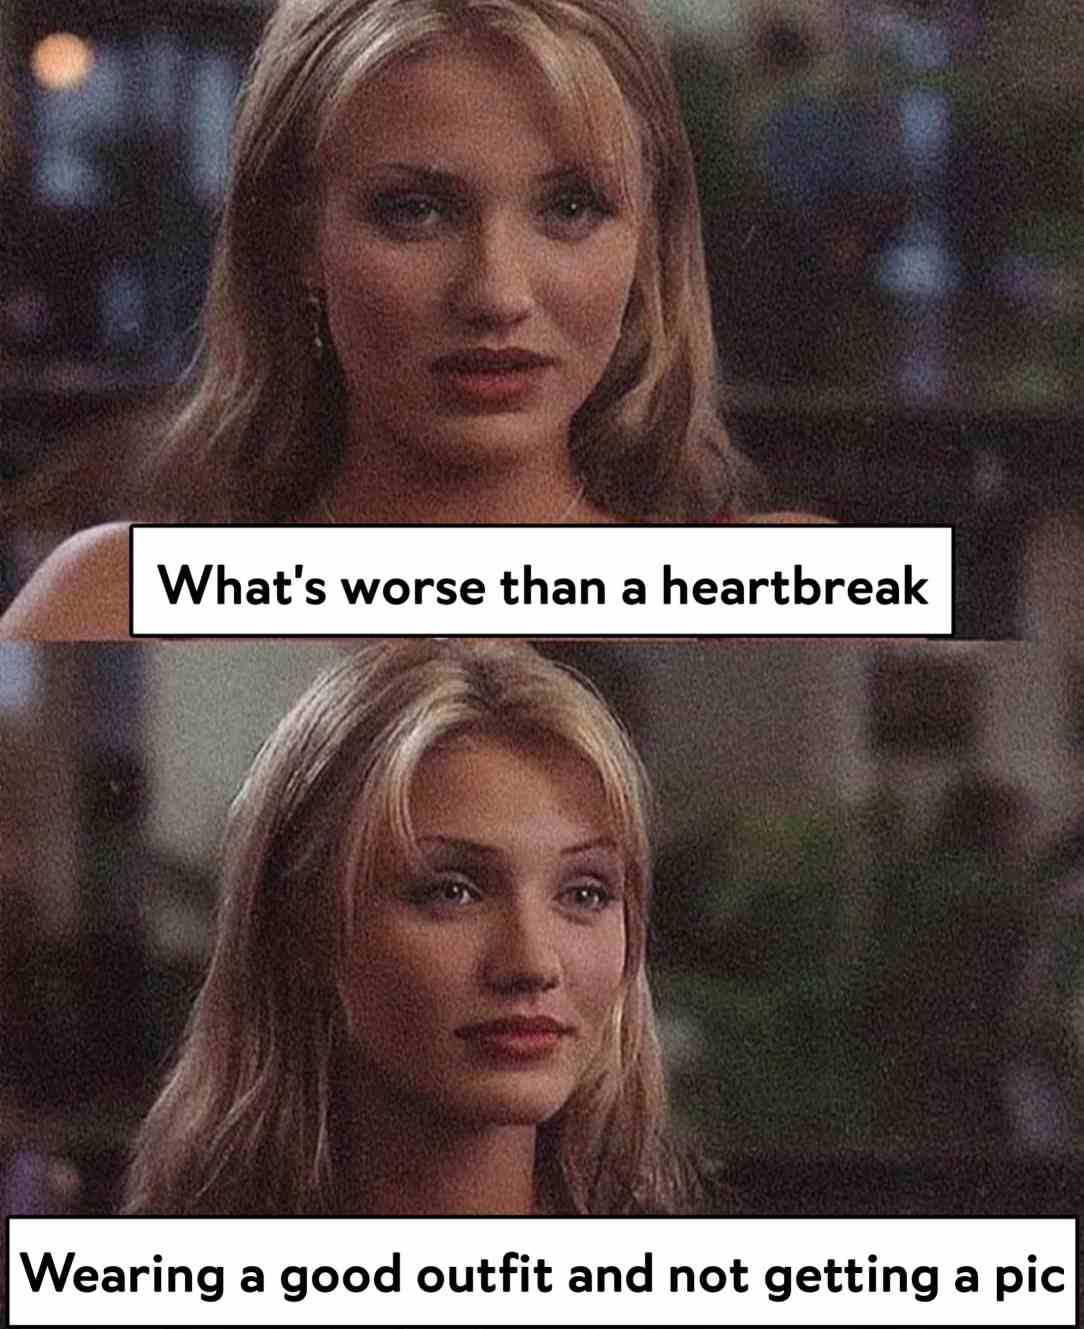 What's worse than a heartbreak?